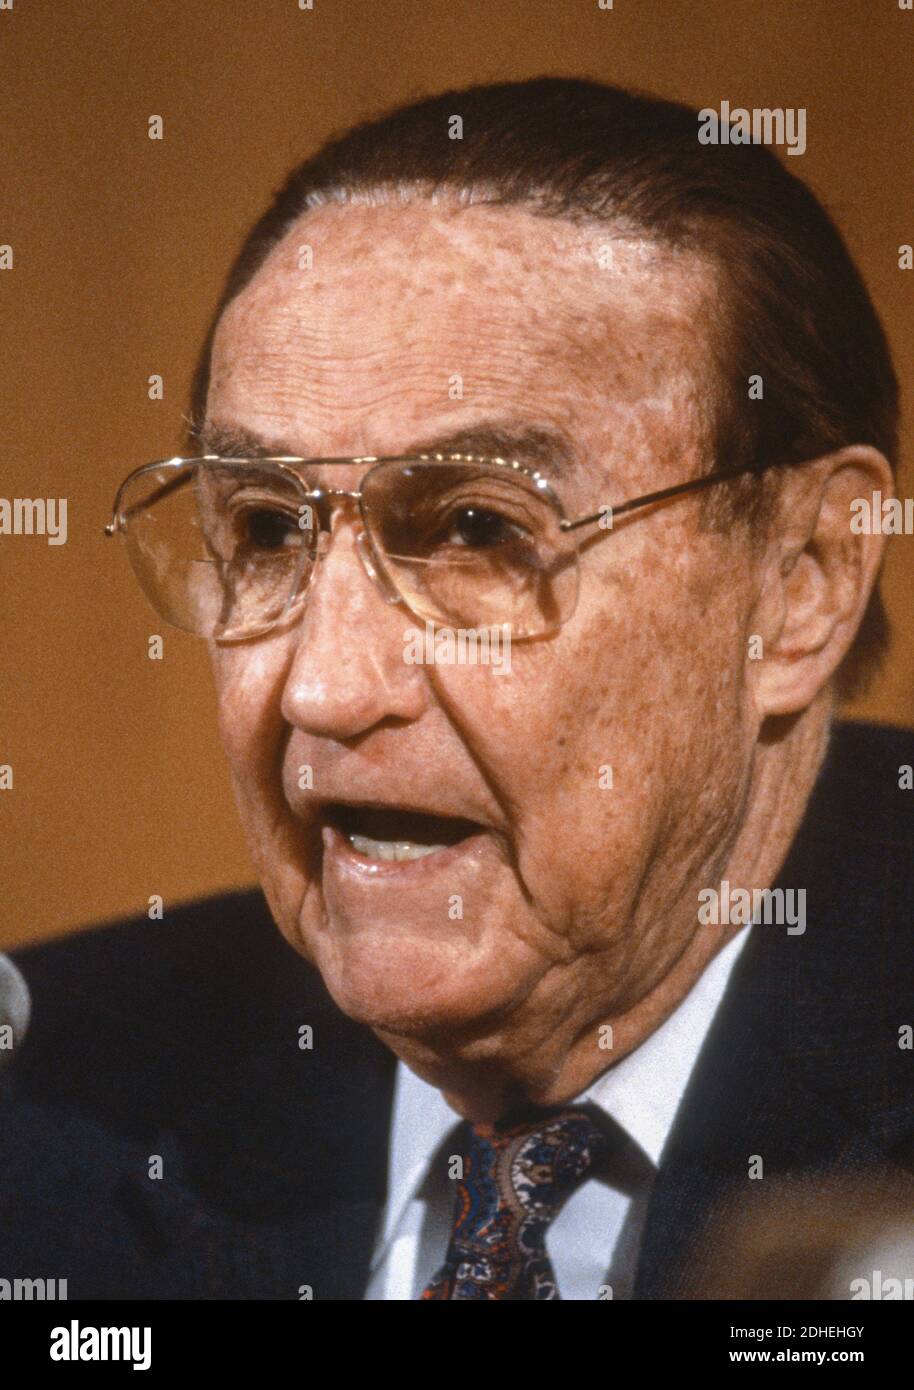 WASHINGTON, DC, USA, 26. FEBRUAR 1991 - US-Senator Strom Thurmond (R-South Carolina) während der Anhörung des Ausschusses. Stockfoto